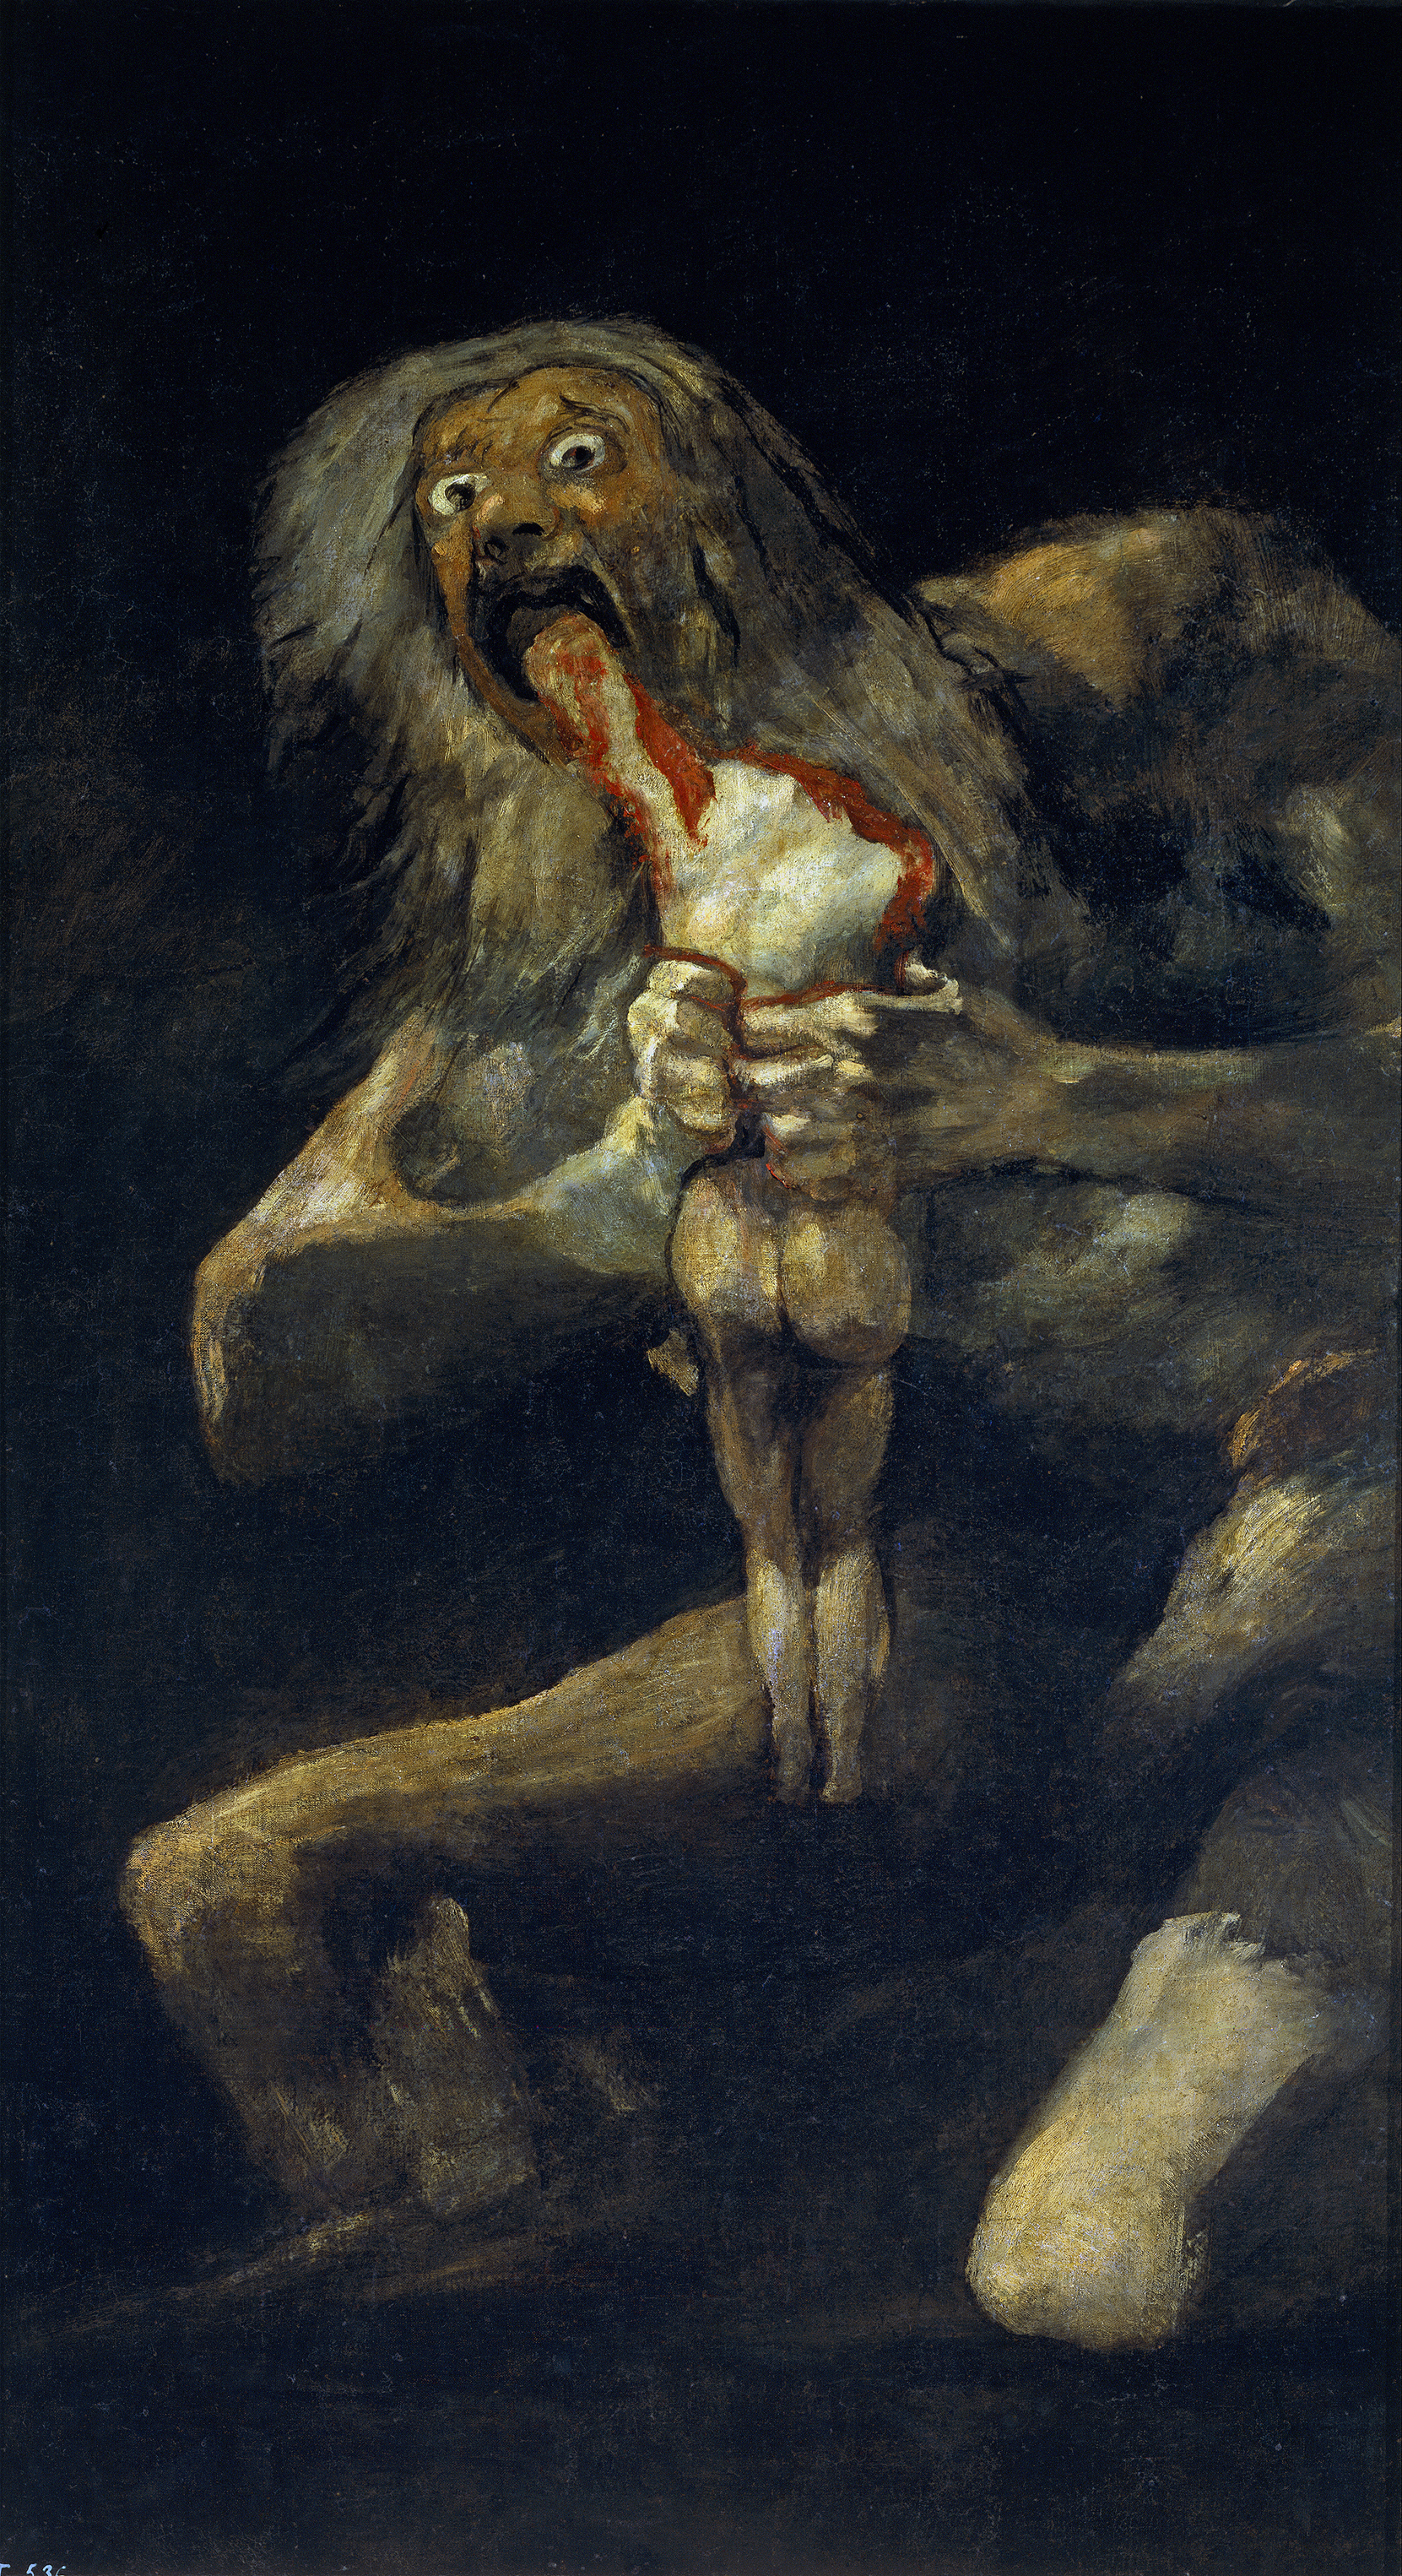 http://upload.wikimedia.org/wikipedia/commons/8/82/Francisco_de_Goya,_Saturno_devorando_a_su_hijo_(1819-1823).jpg